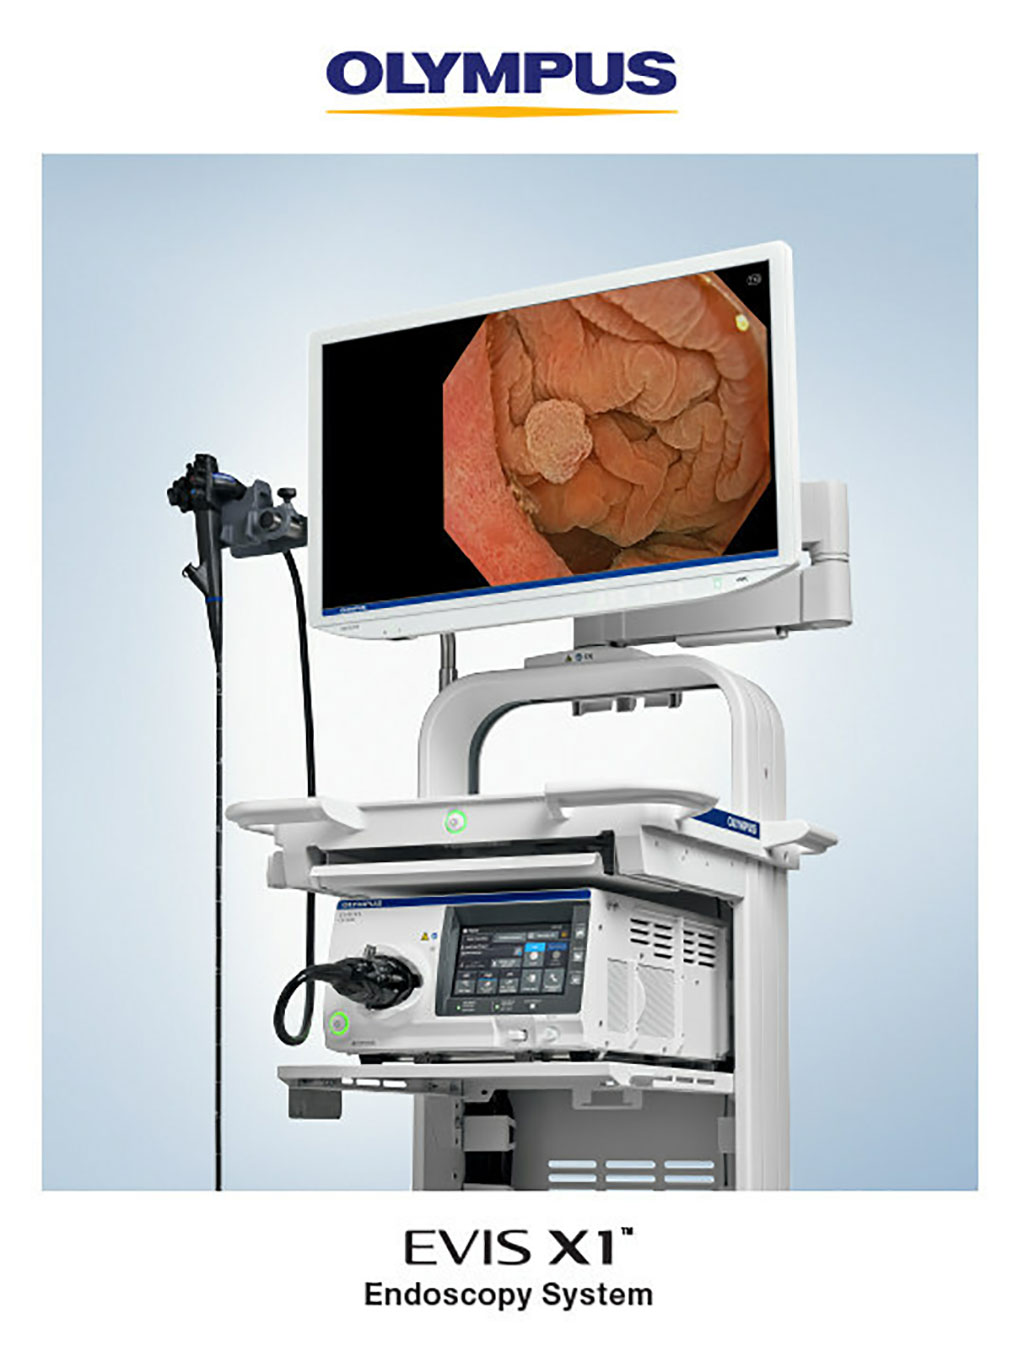 Image: The Olympus EVIS X1 endoscopy system (Photo courtesy of Olympus)